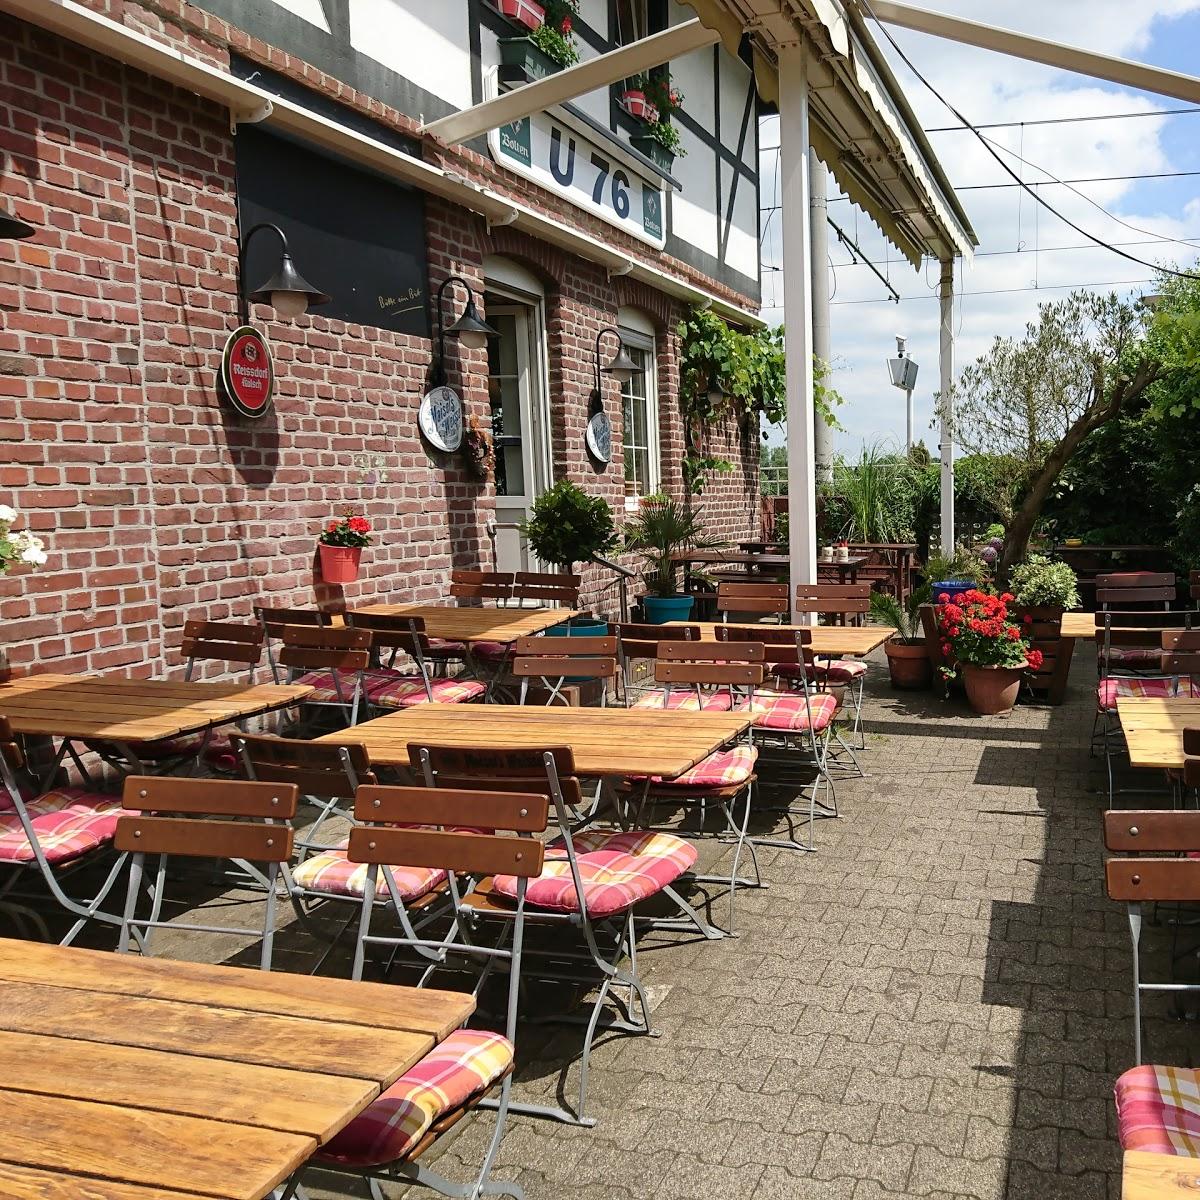 Restaurant "U-76" in Krefeld